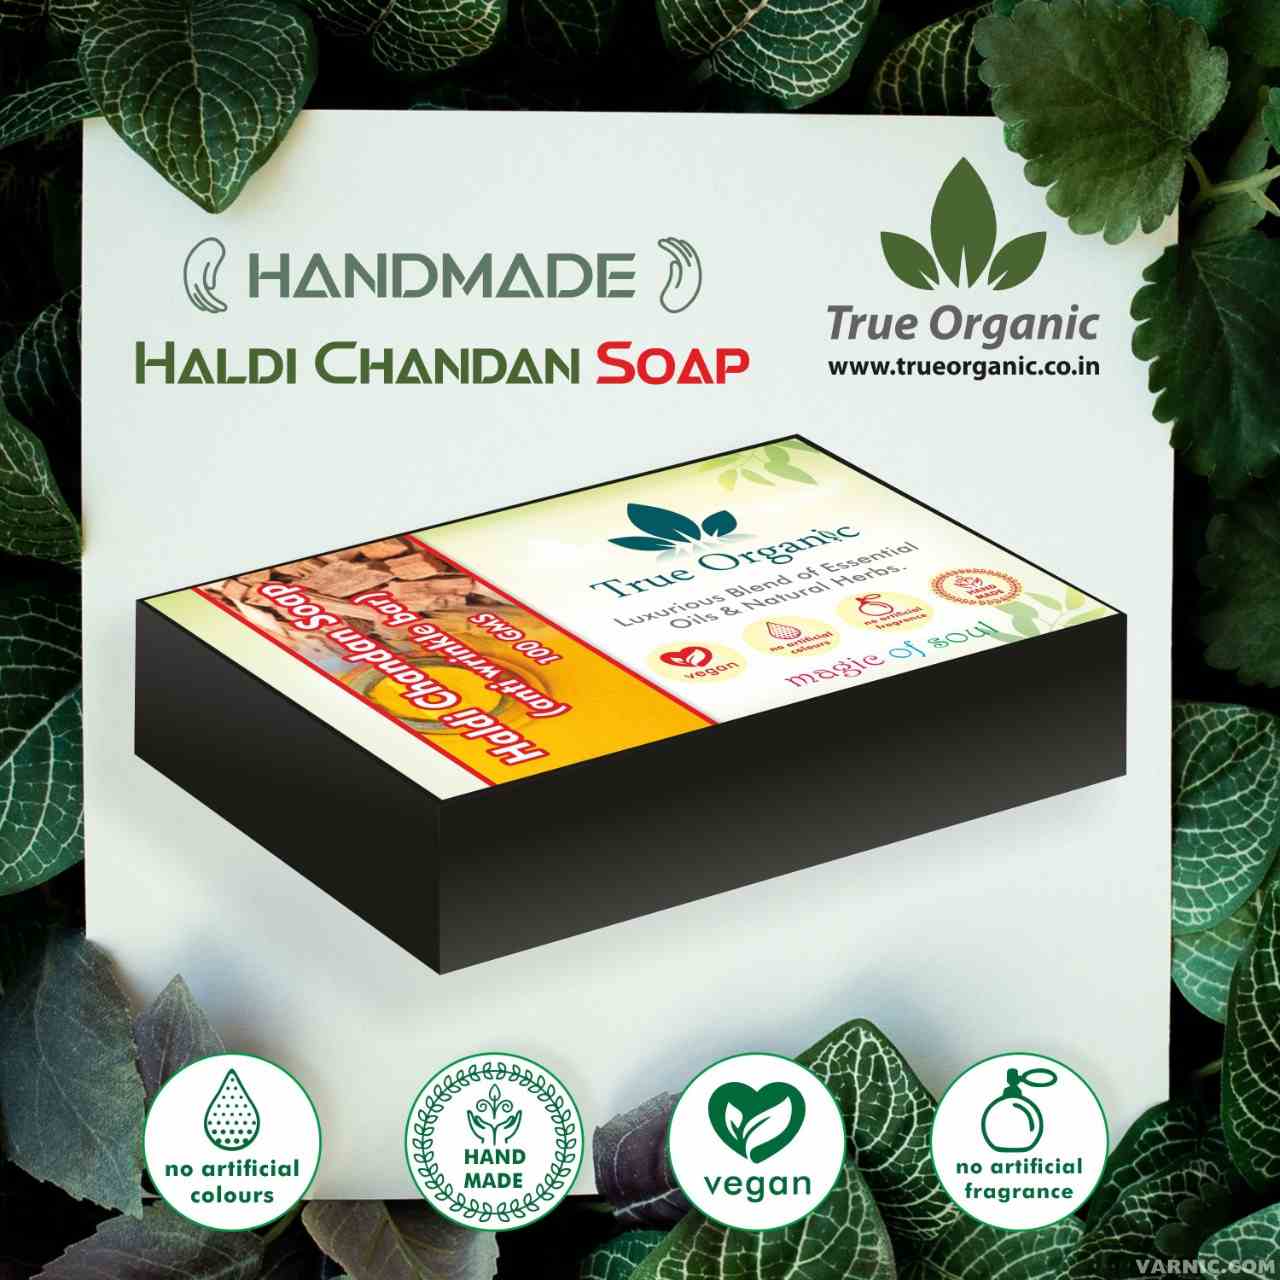 True Organic Haldi Chandan Soap